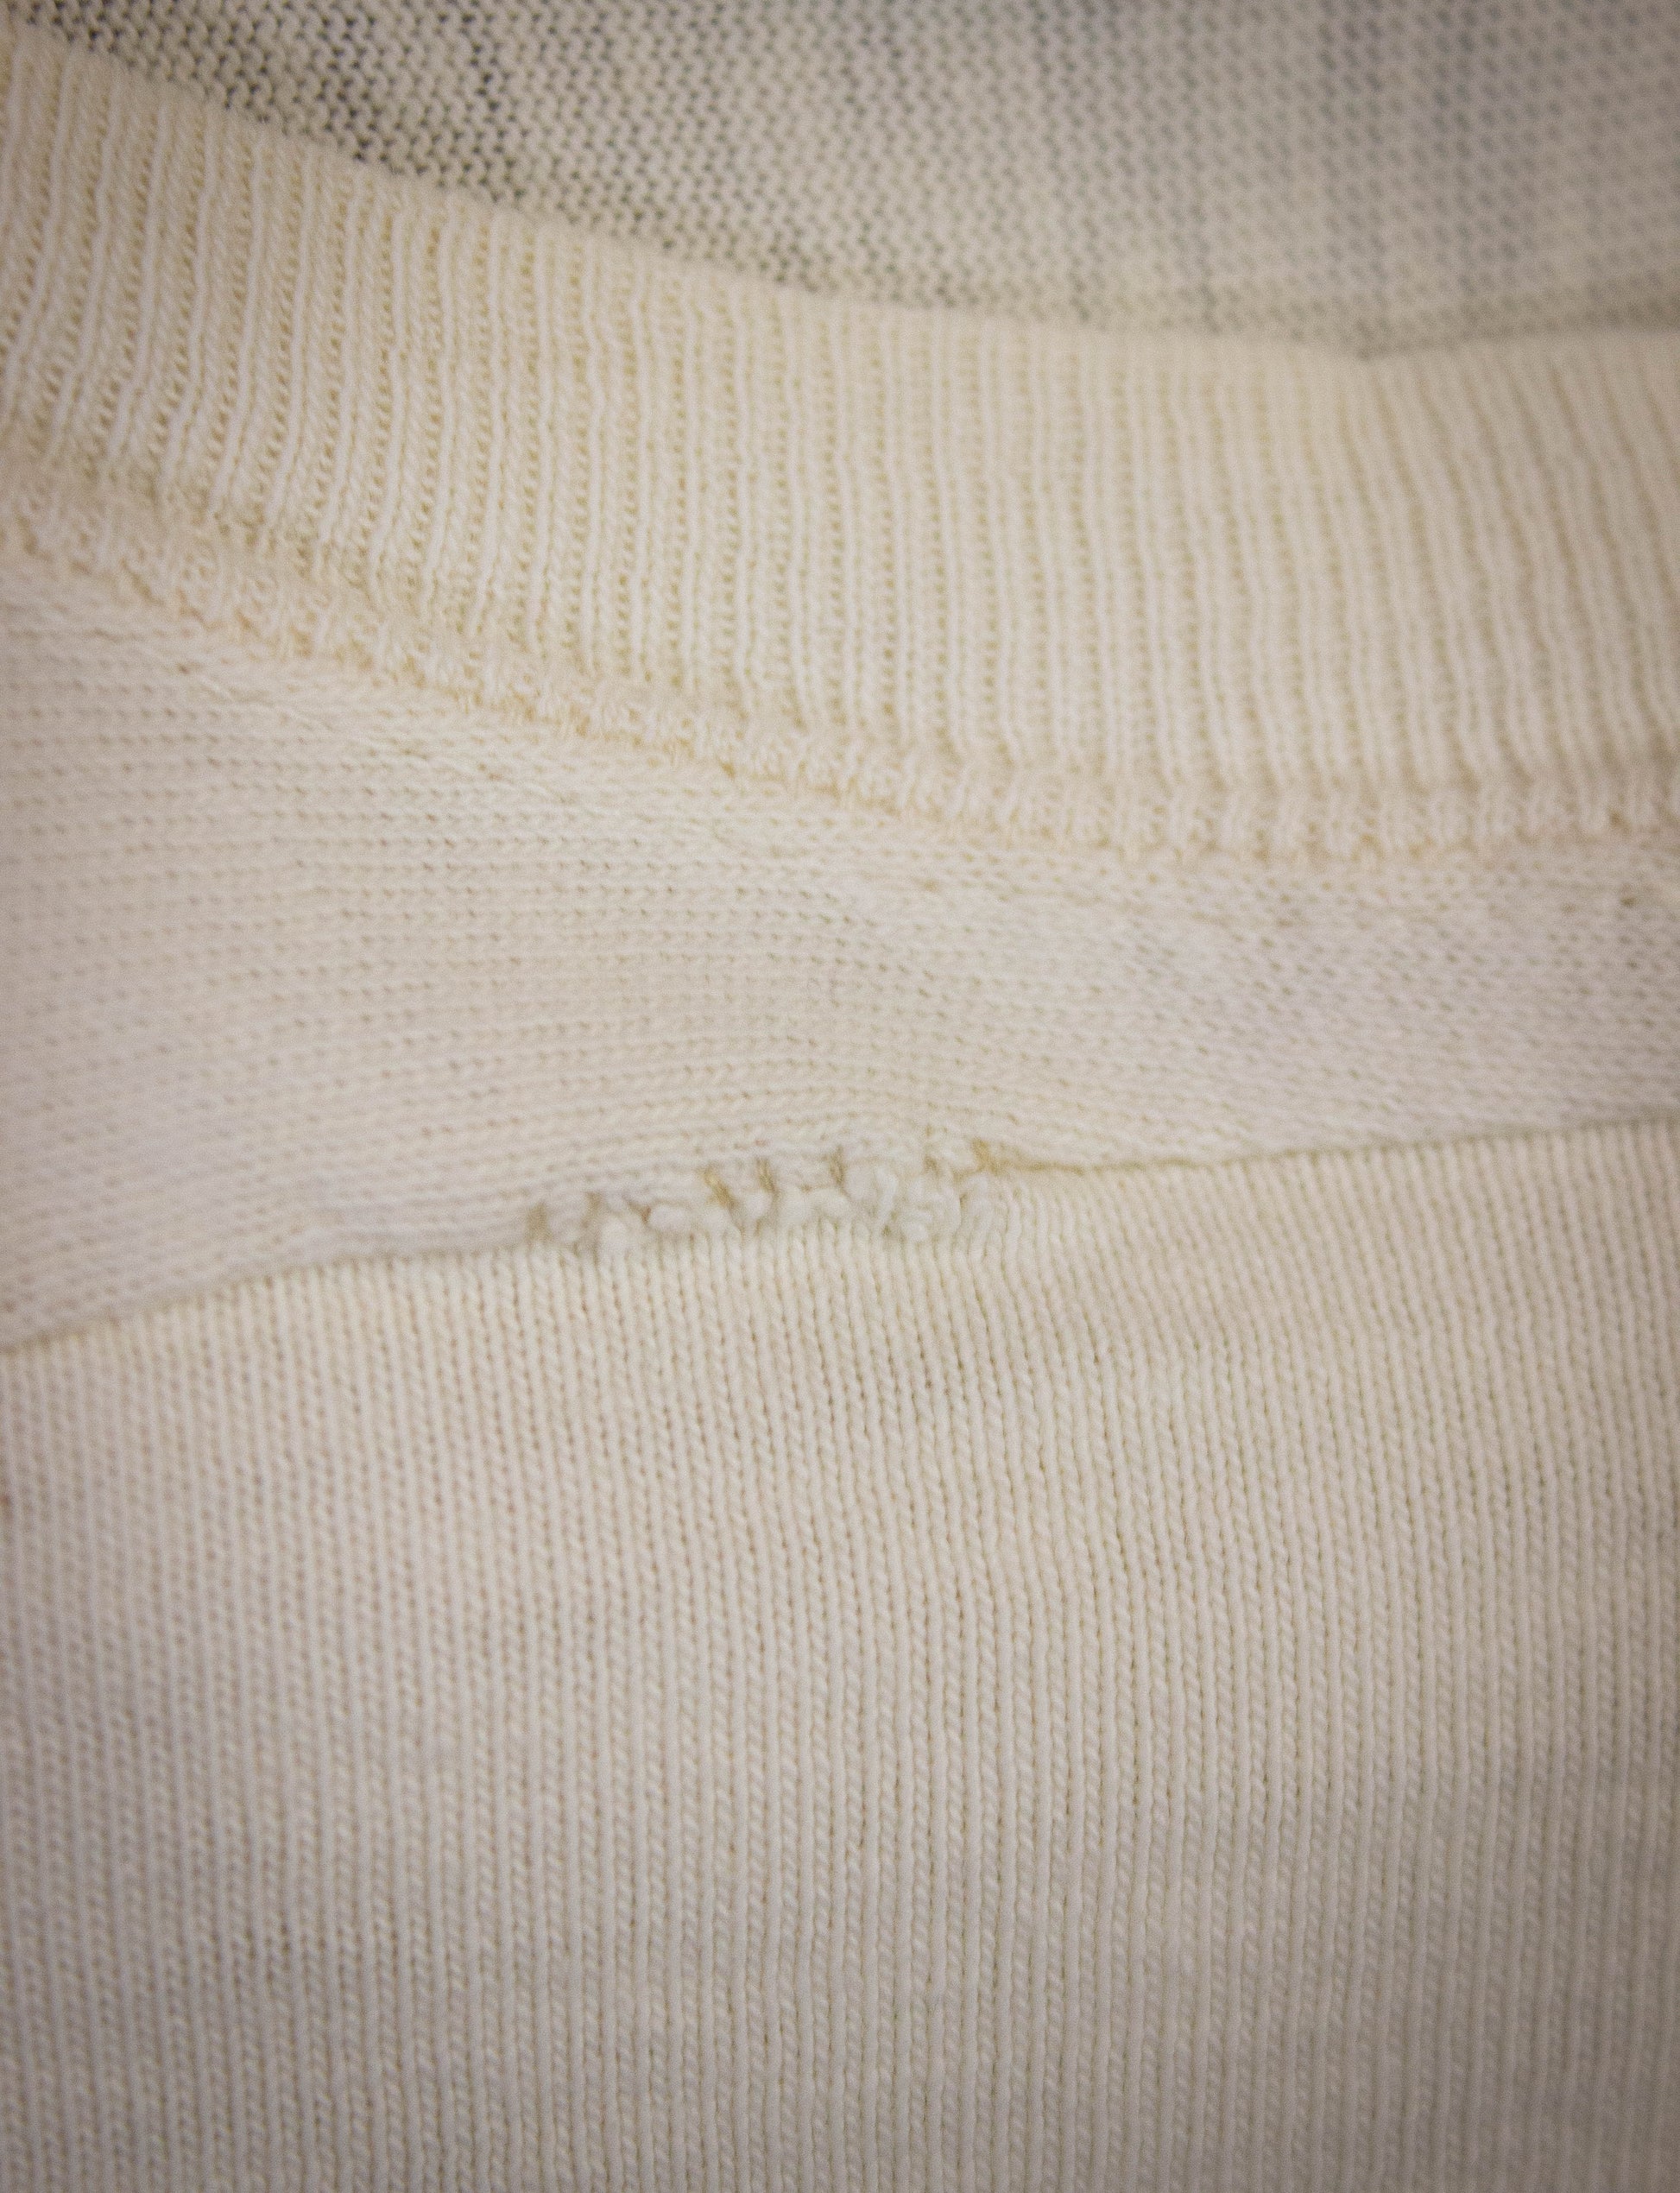 Vintage UC Riverside Long Sleeve Jersey T Shirt 1980 White Small/Medium